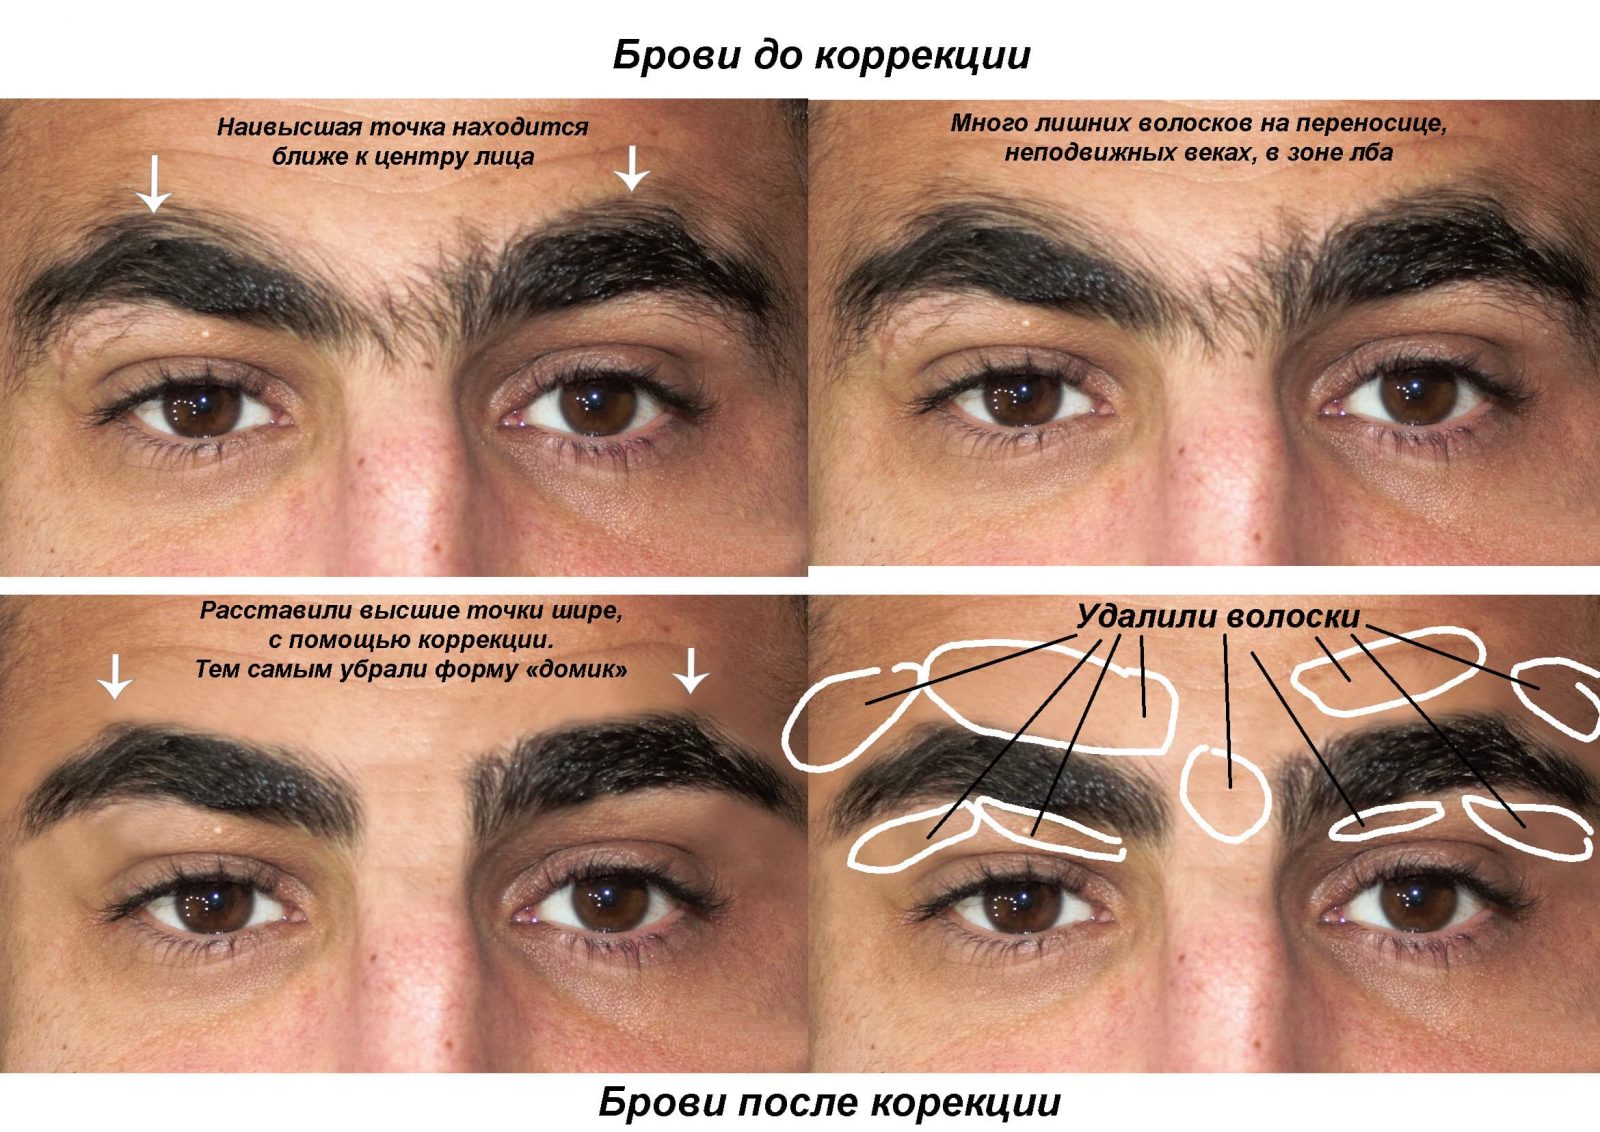 Коррекция бровей у мужчин до и после фото